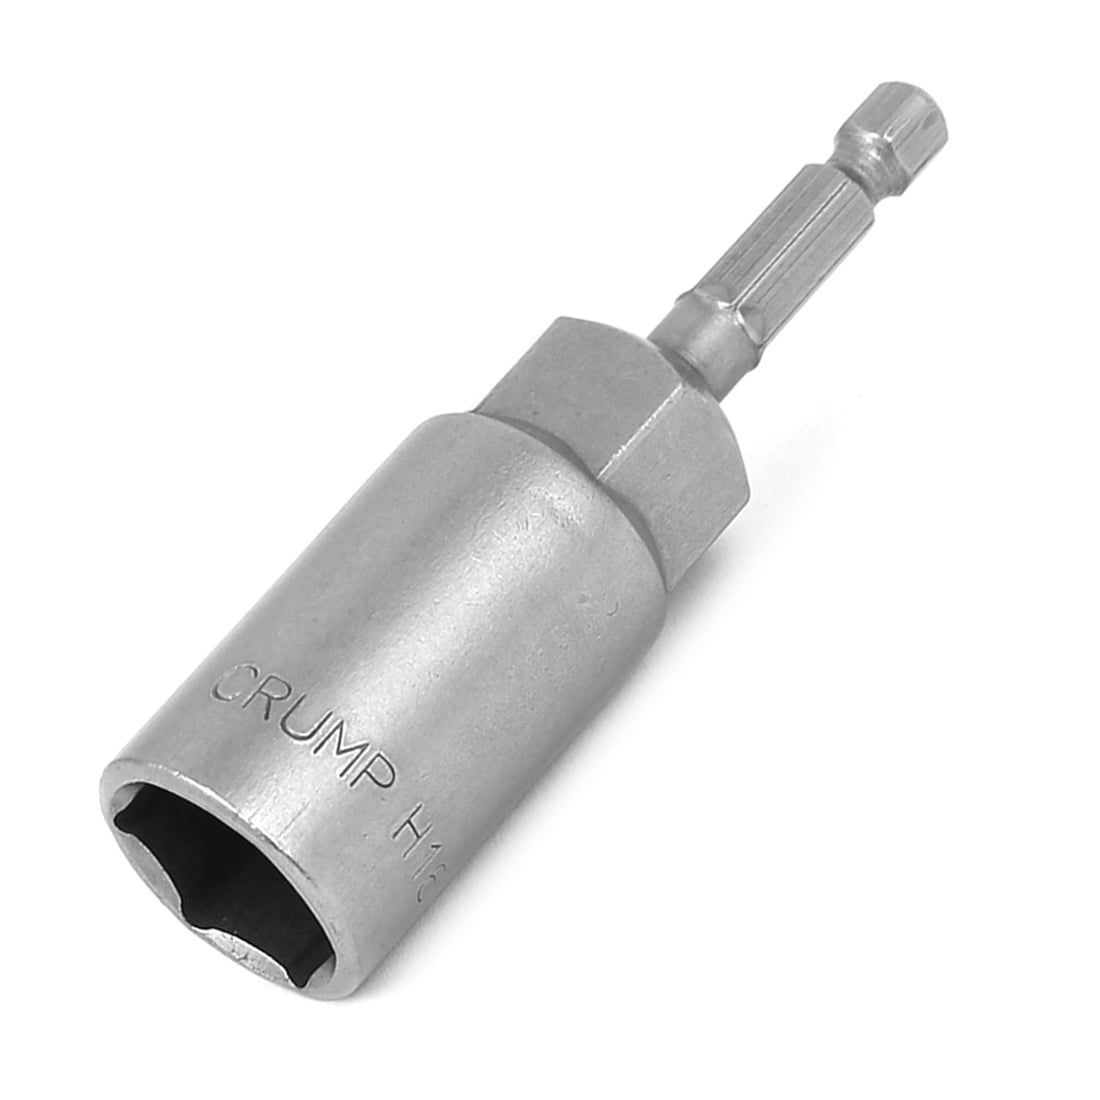 H16 80mm Long 1/4" Shank 16mm Hex Socket Impact Nut Setter Driver Bit Adapter 602451235941 